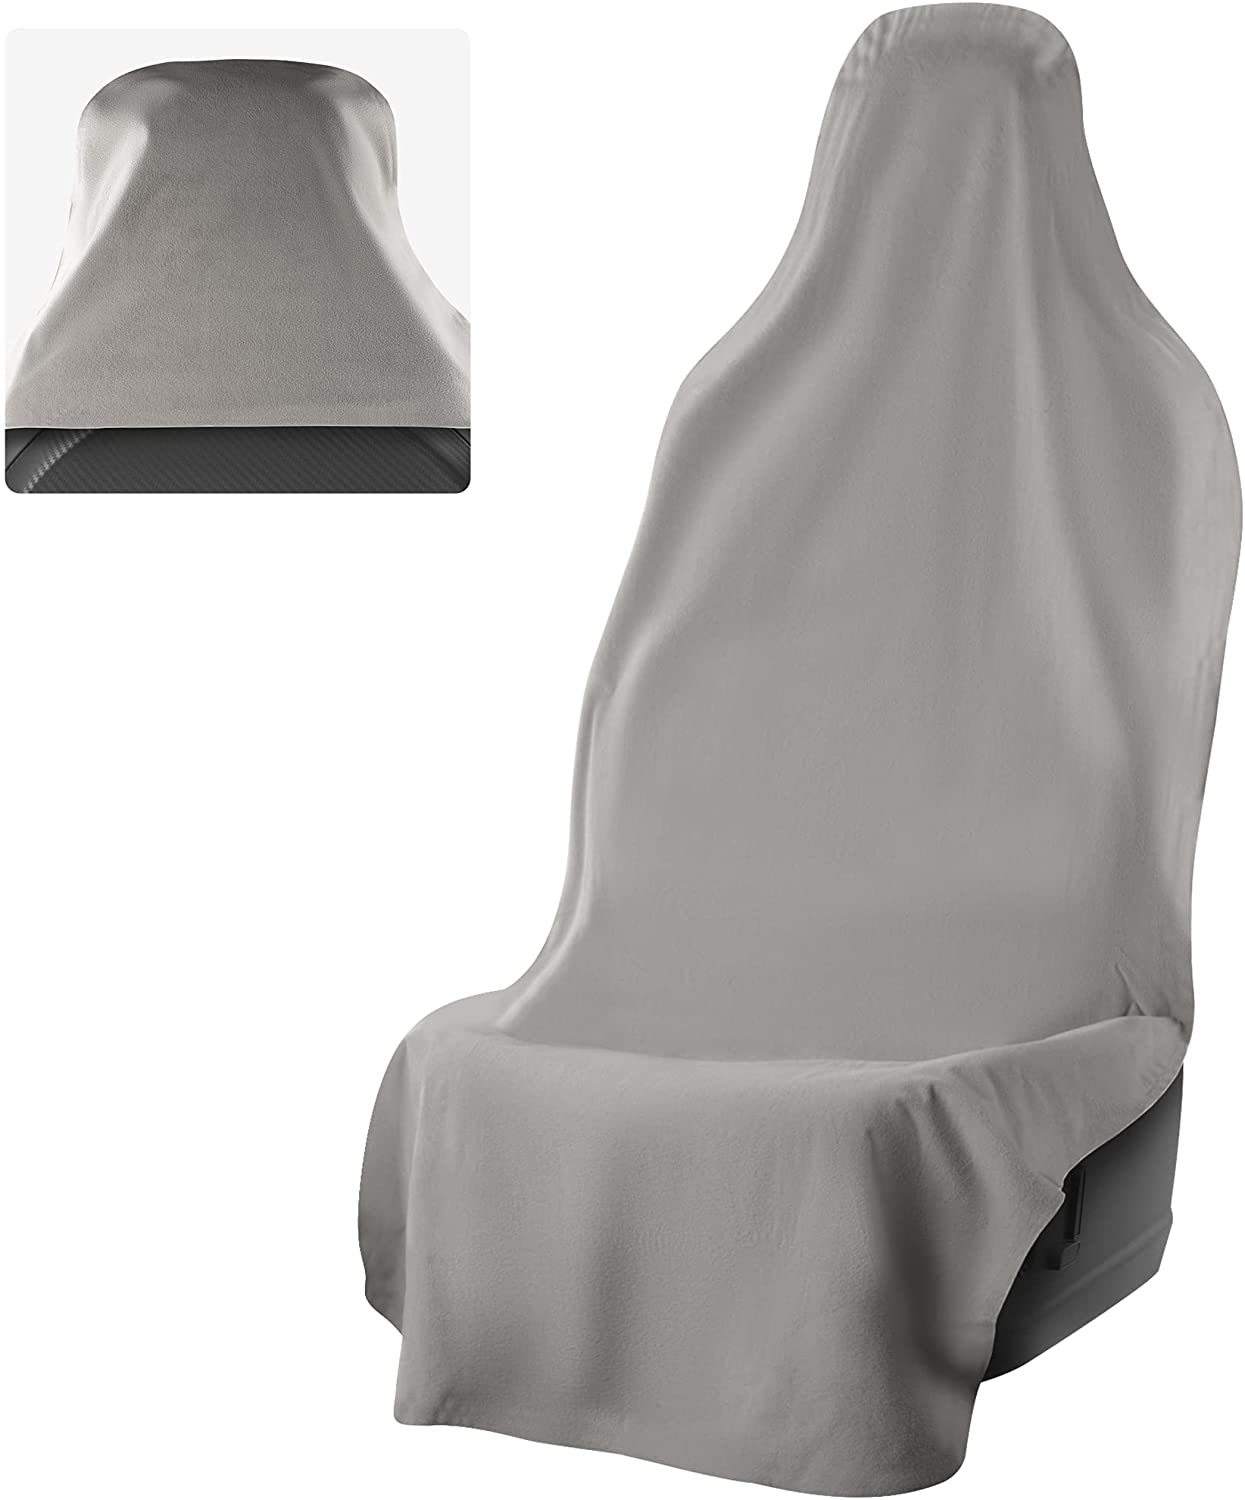 Ultrasport Seatshield Anti-Odor and Moisture-Wicking